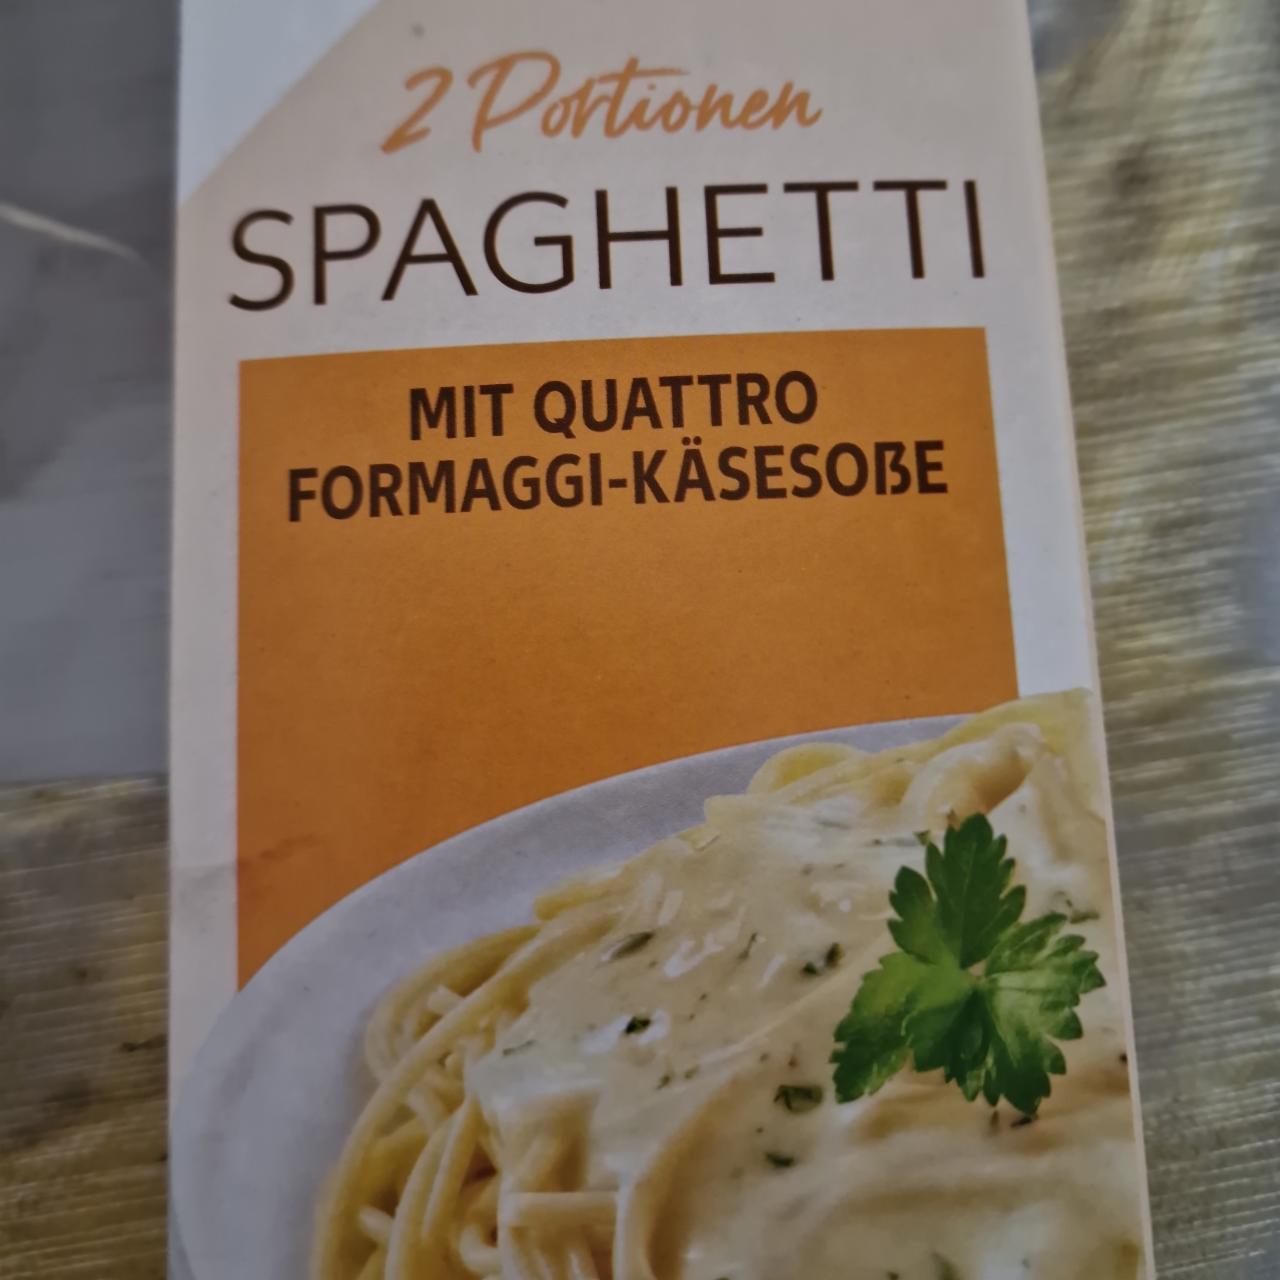 Fotografie - Spaghetti mit quattro formaggi-käsesoße